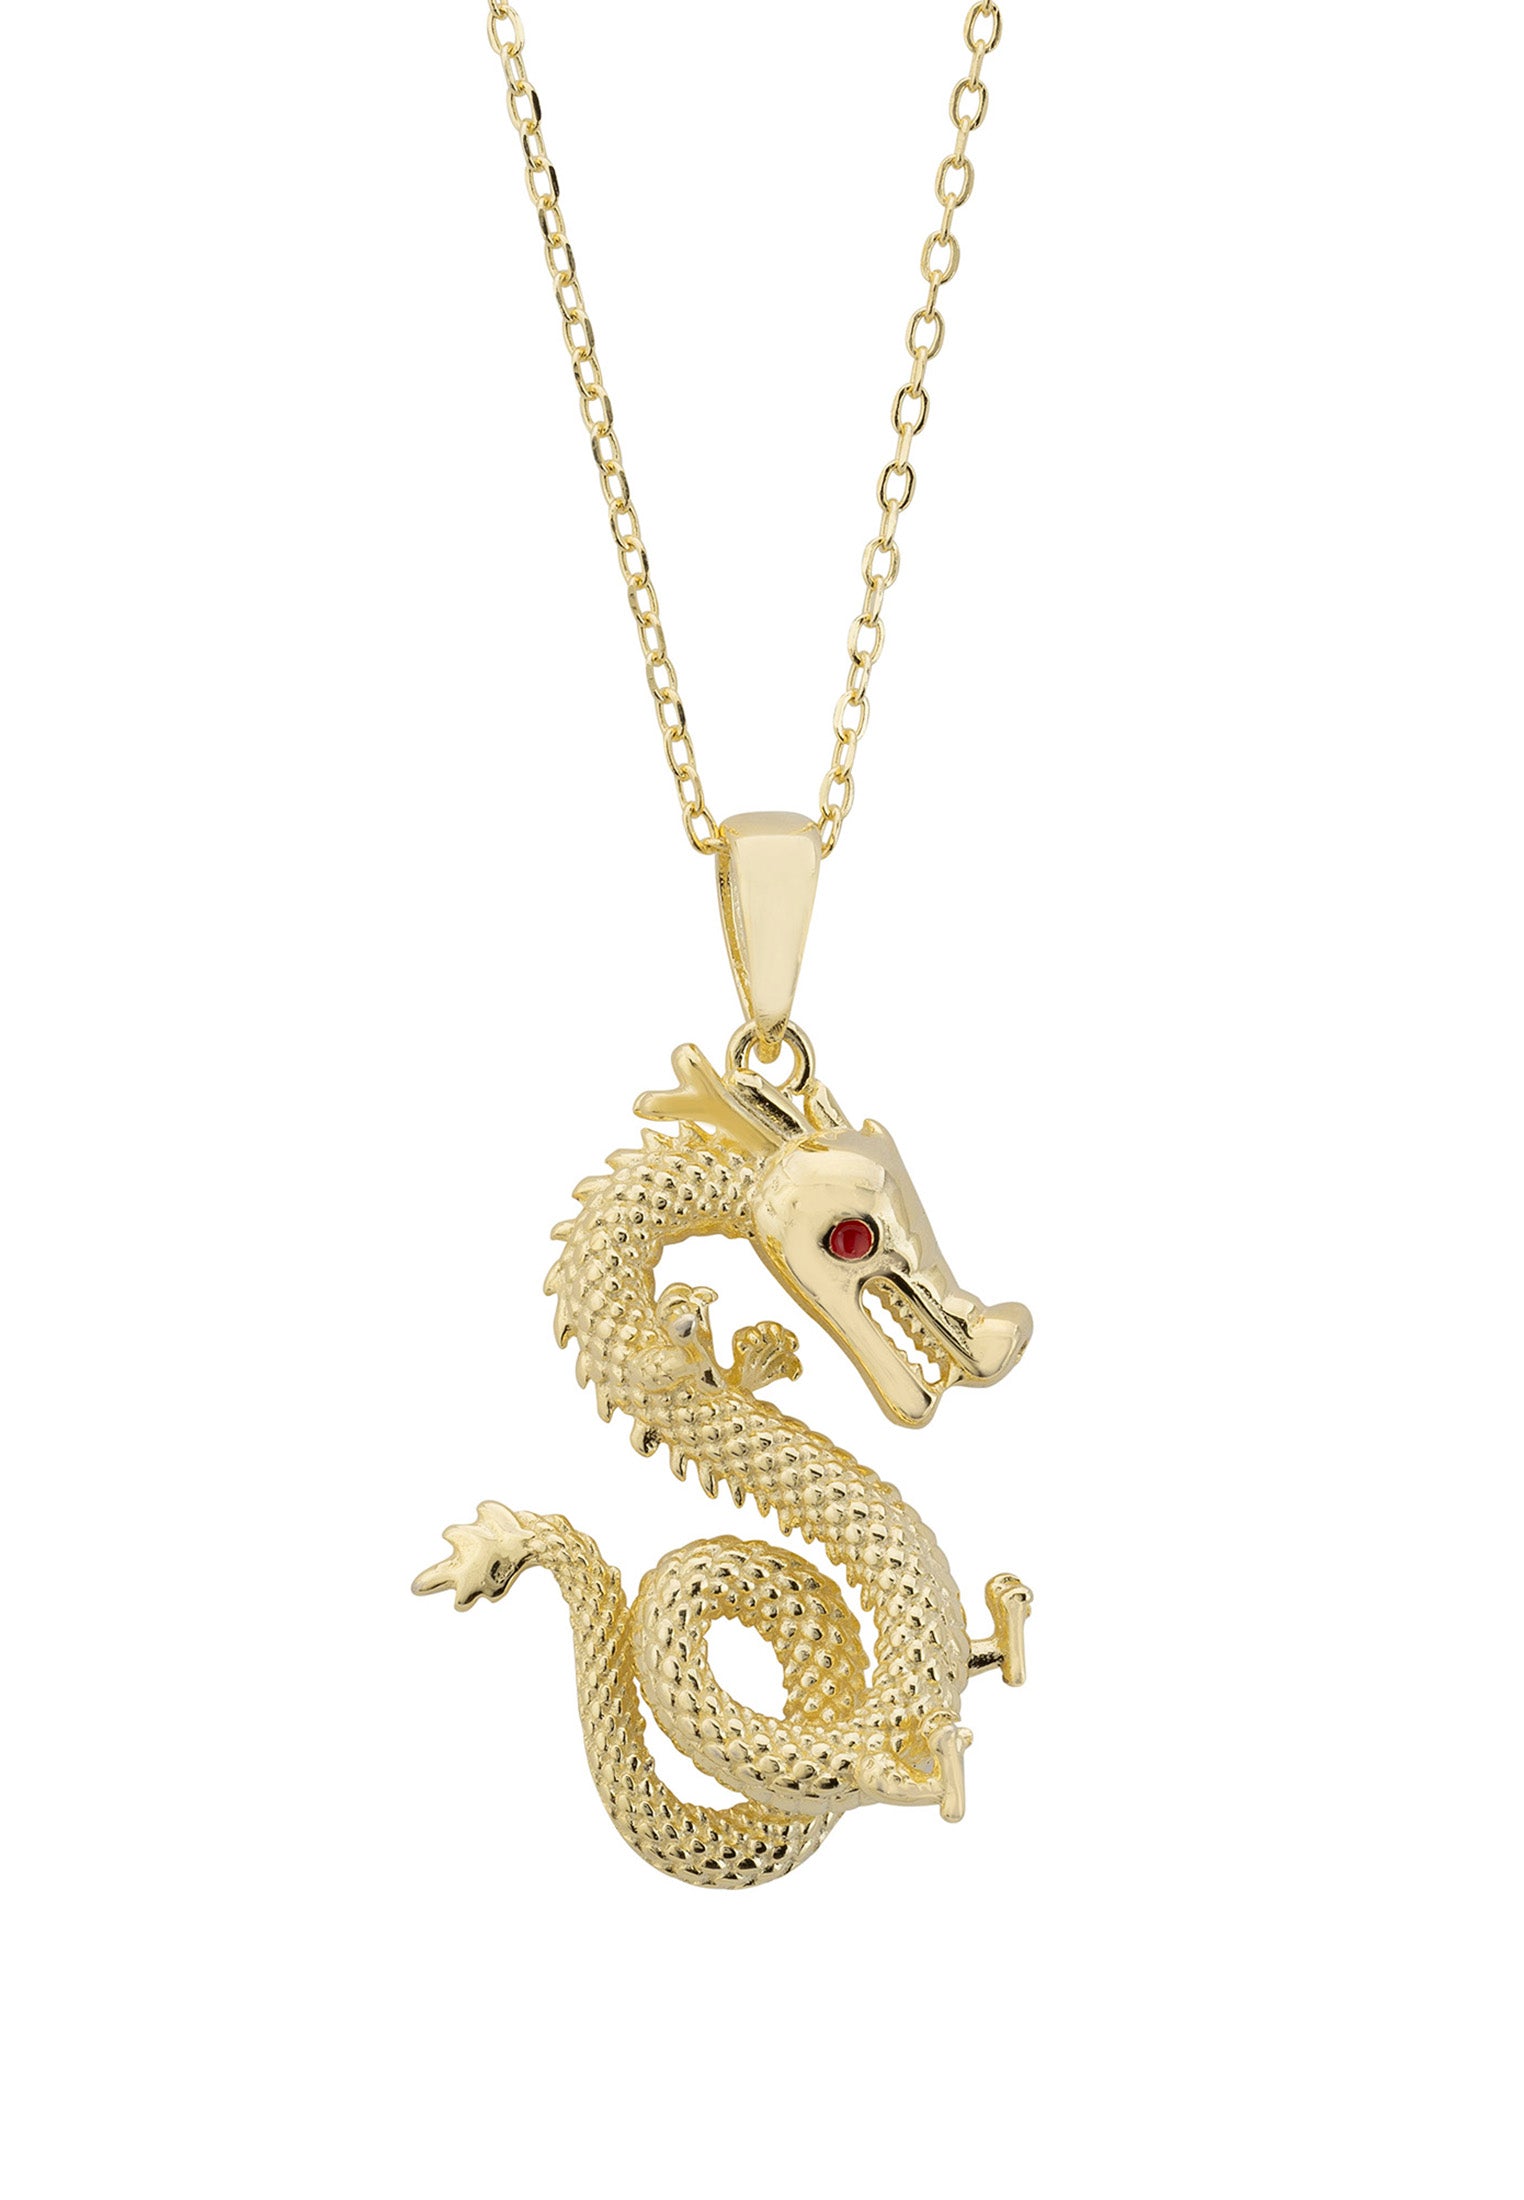 Enter The Dragon Pendant Necklace Gold